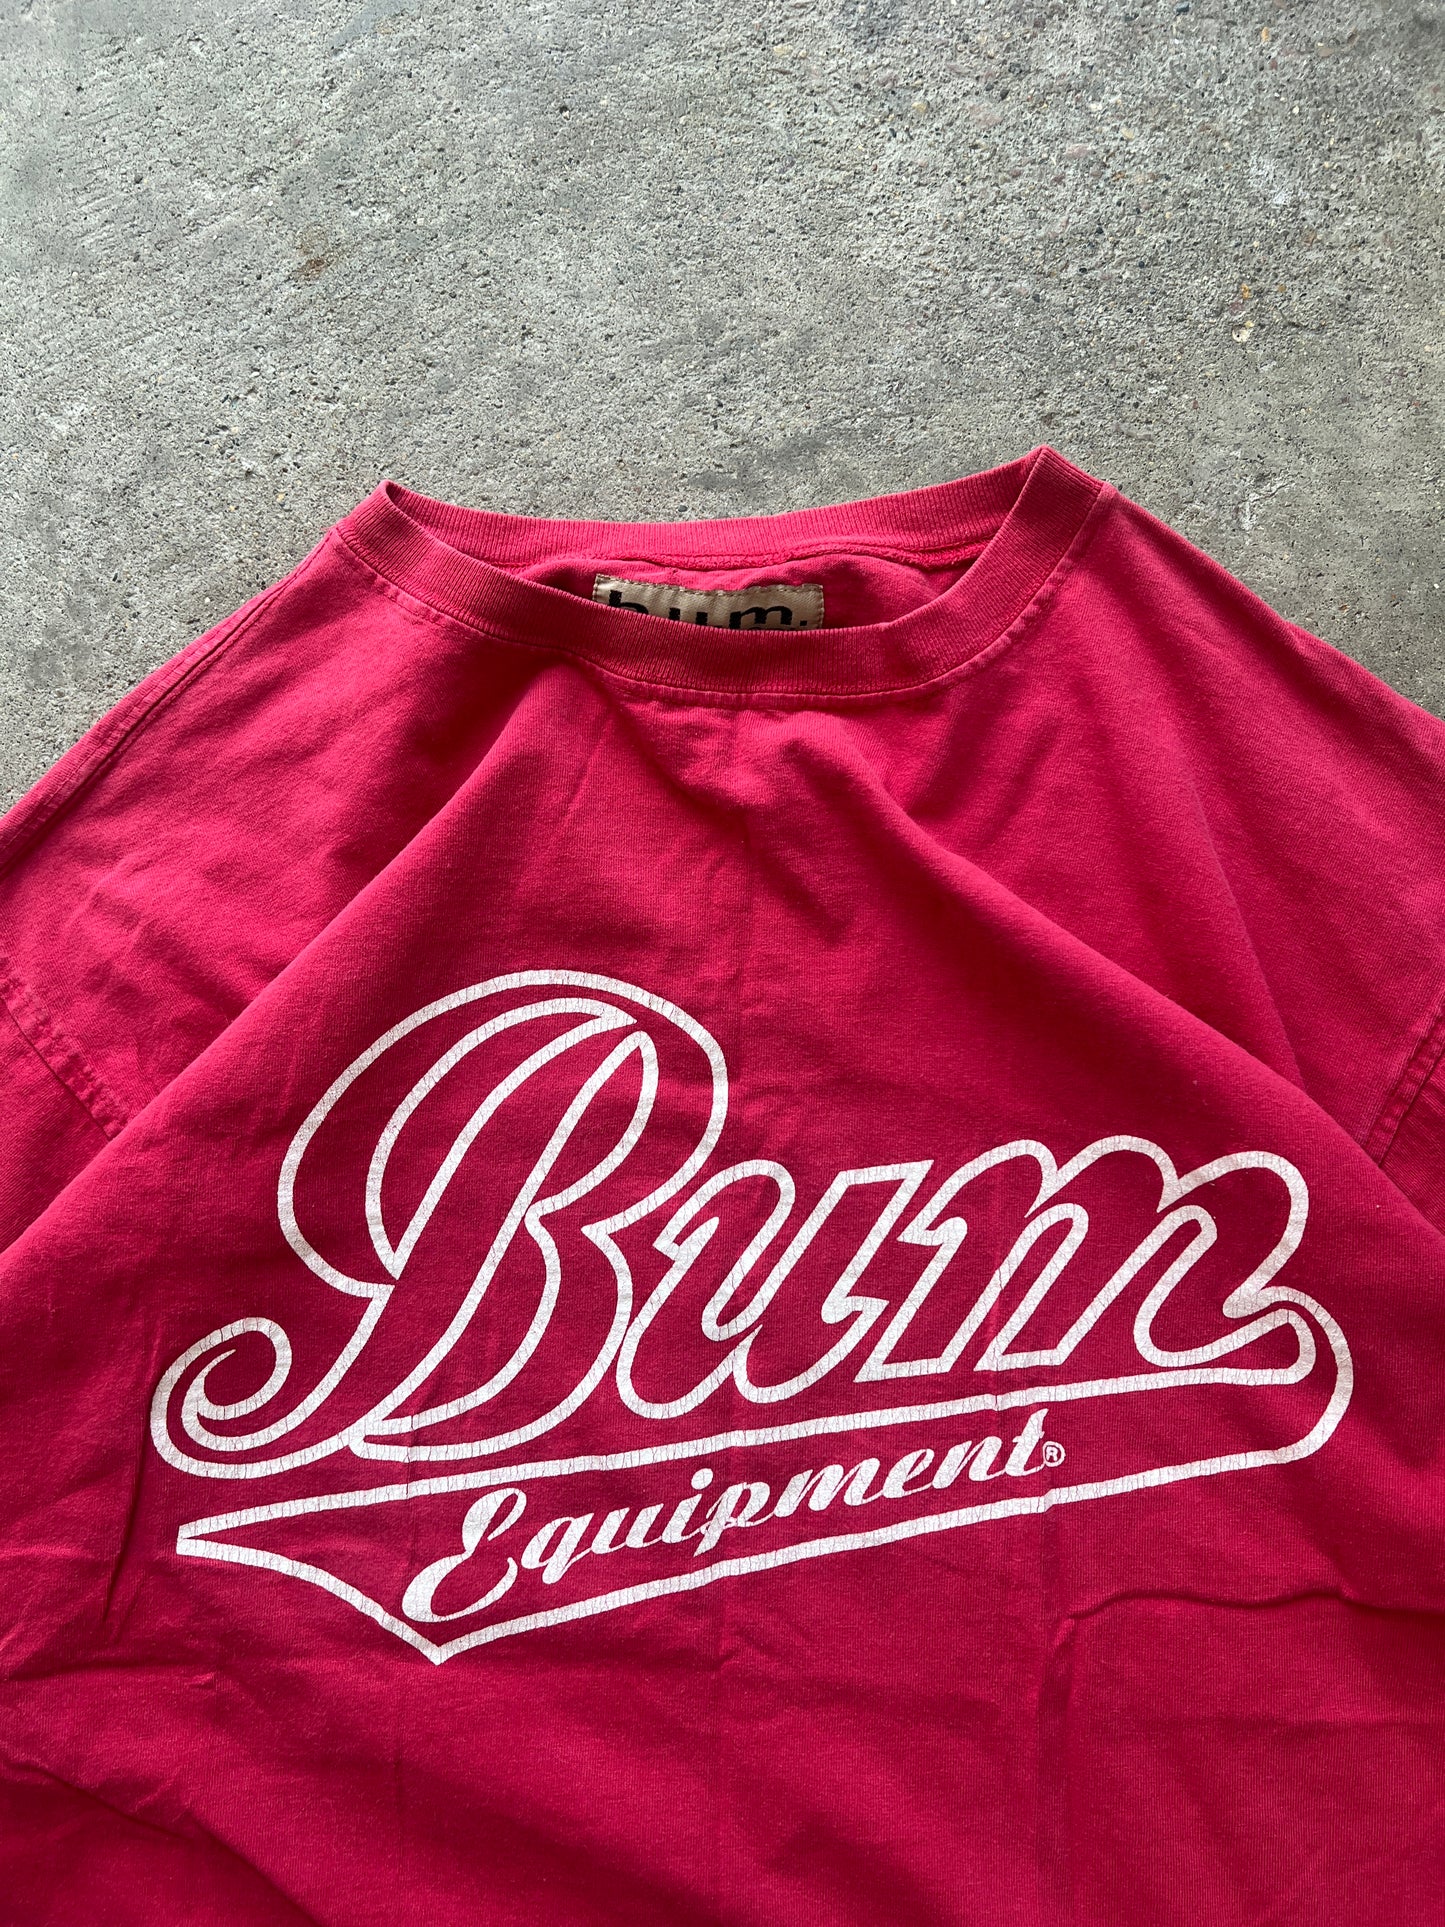 Vintage Bum Equipment Shirt - XL